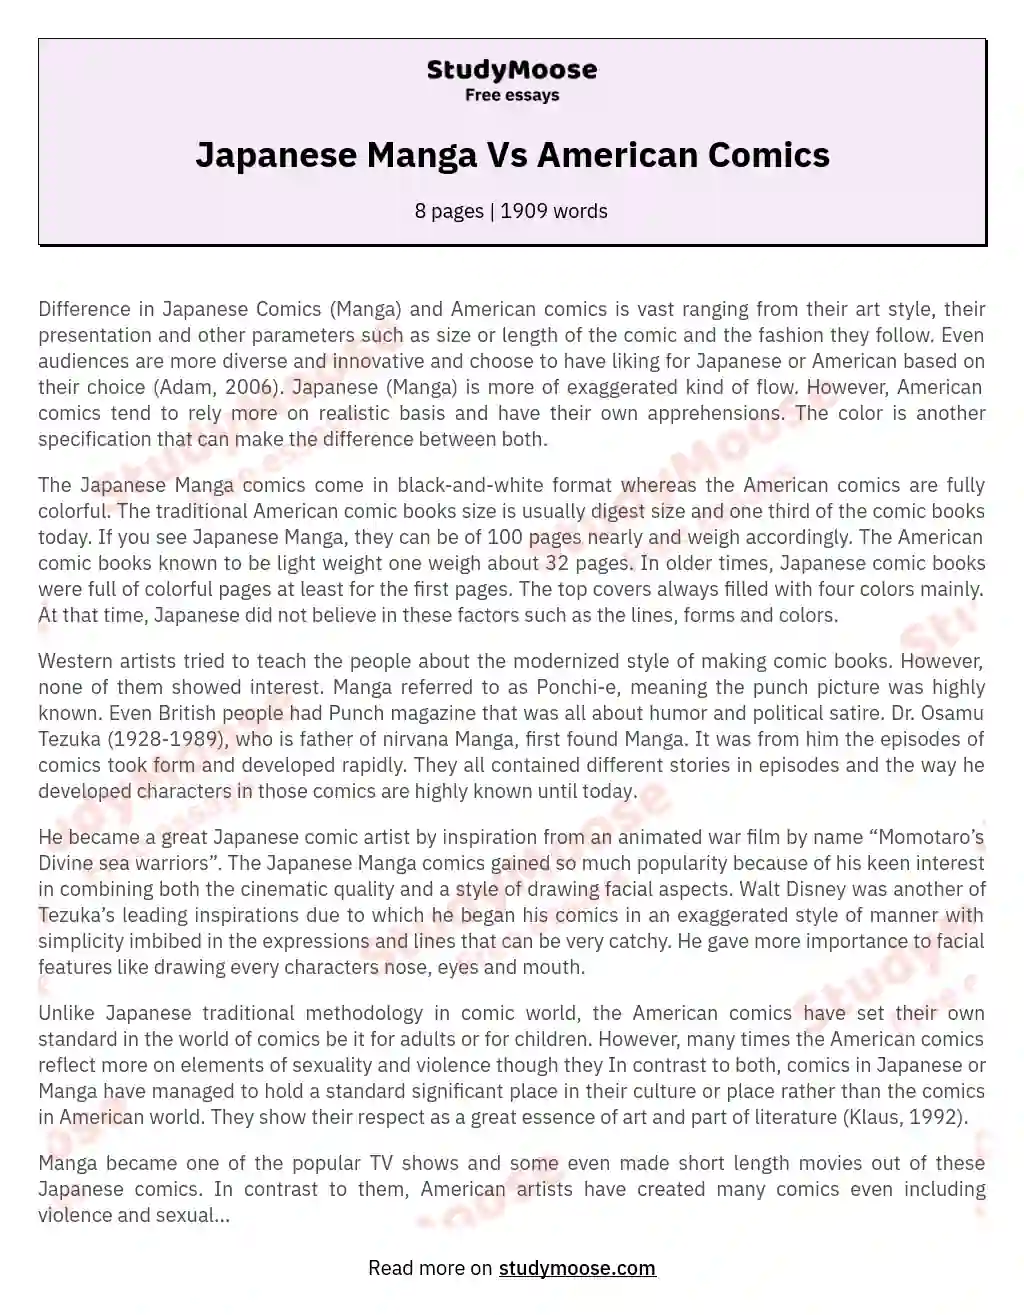 Japanese Manga Vs American Comics essay